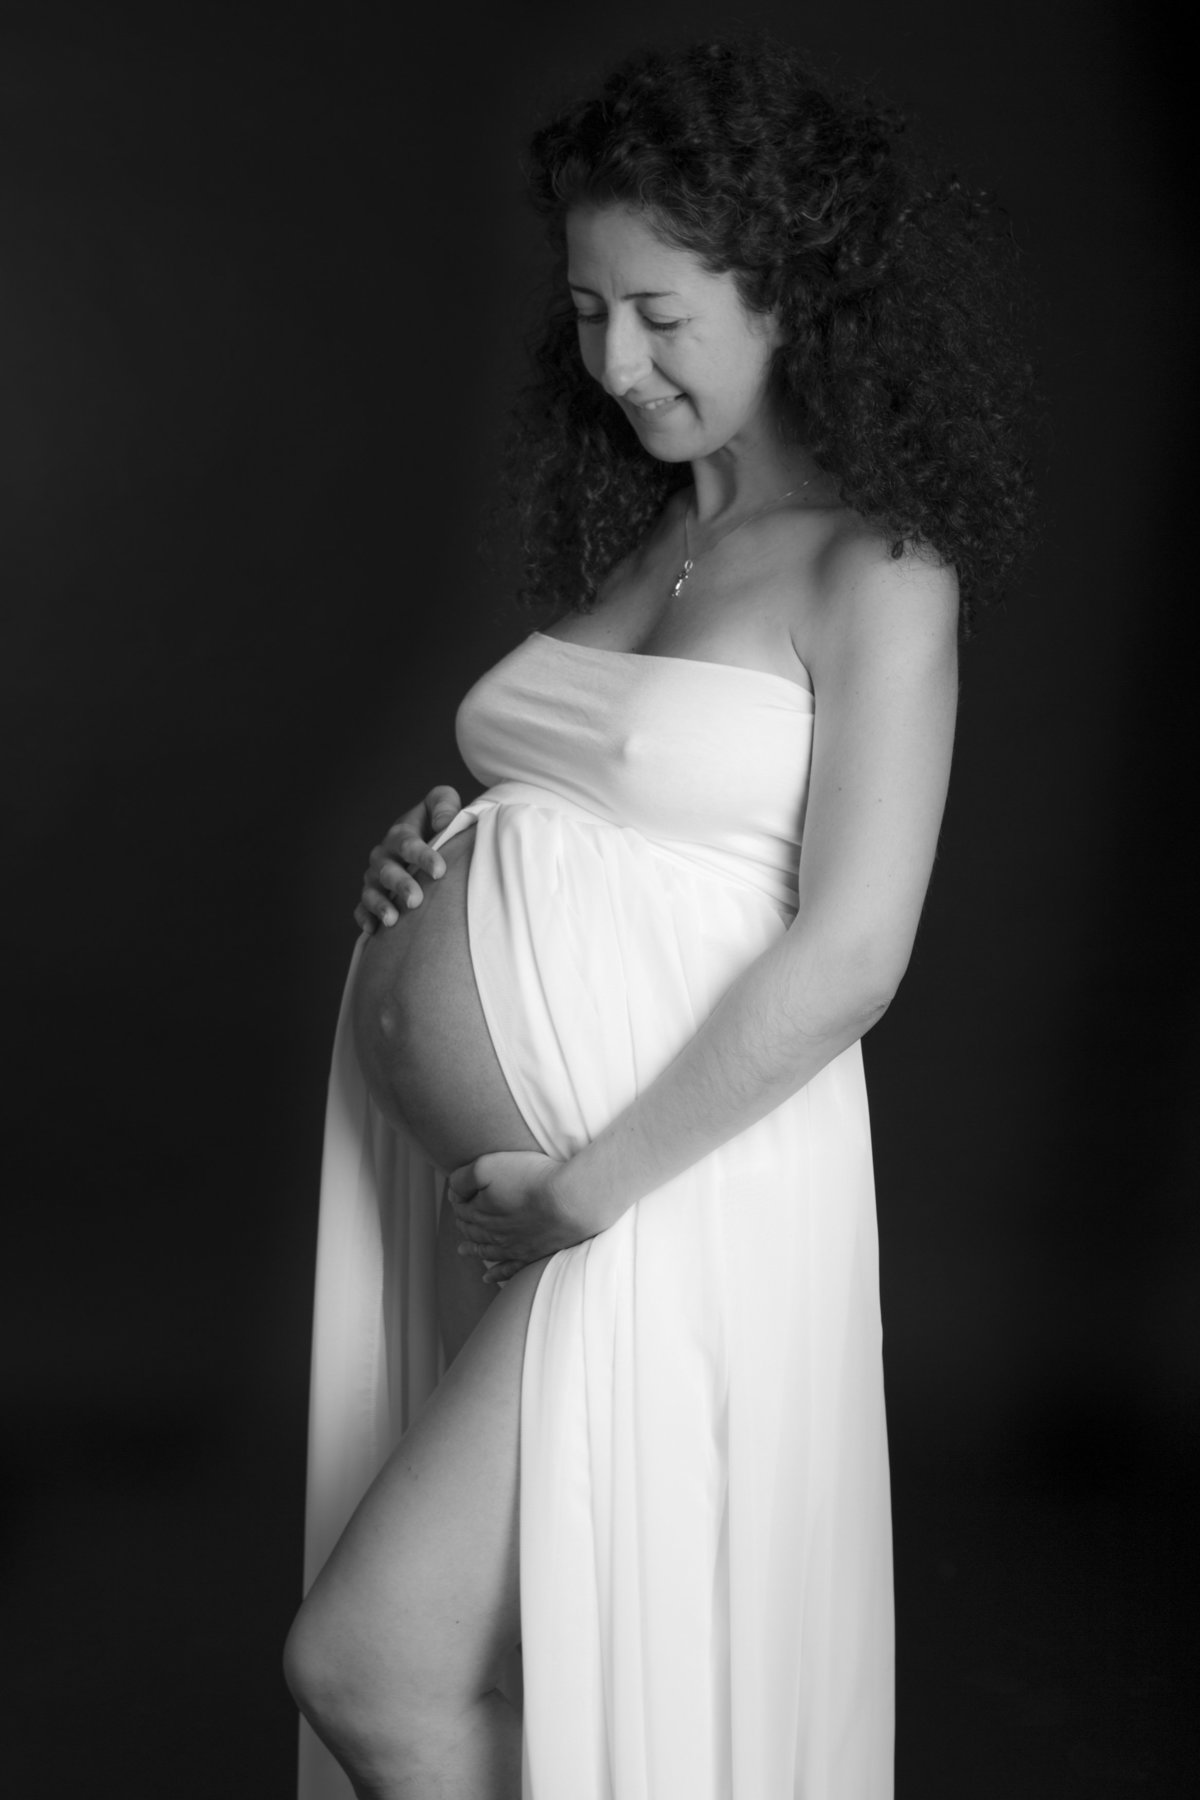 maryam  ken-maternity photos-devi pride photography-072bw